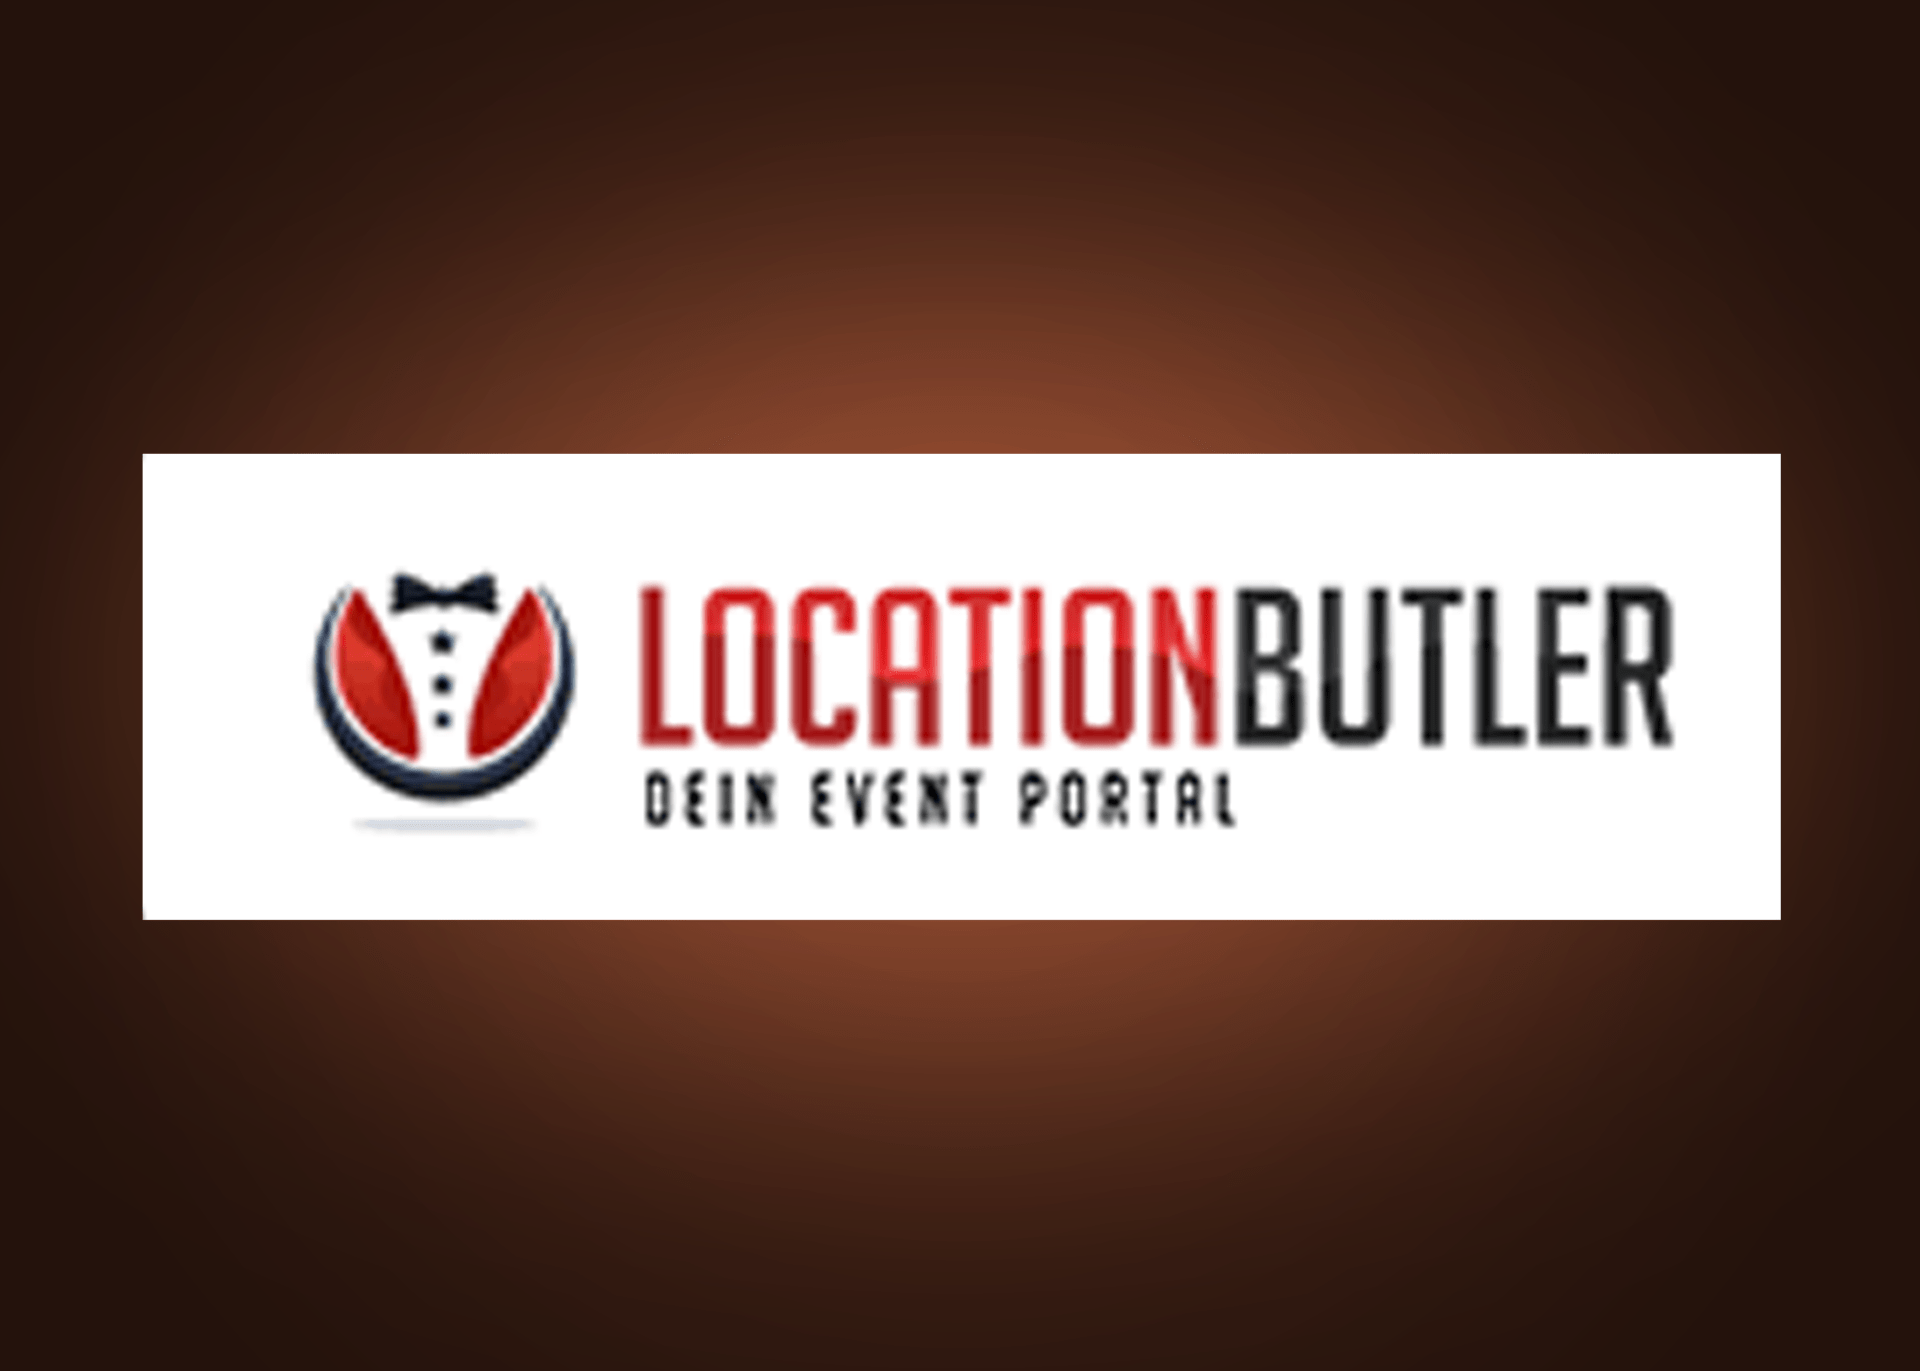 location-butler 